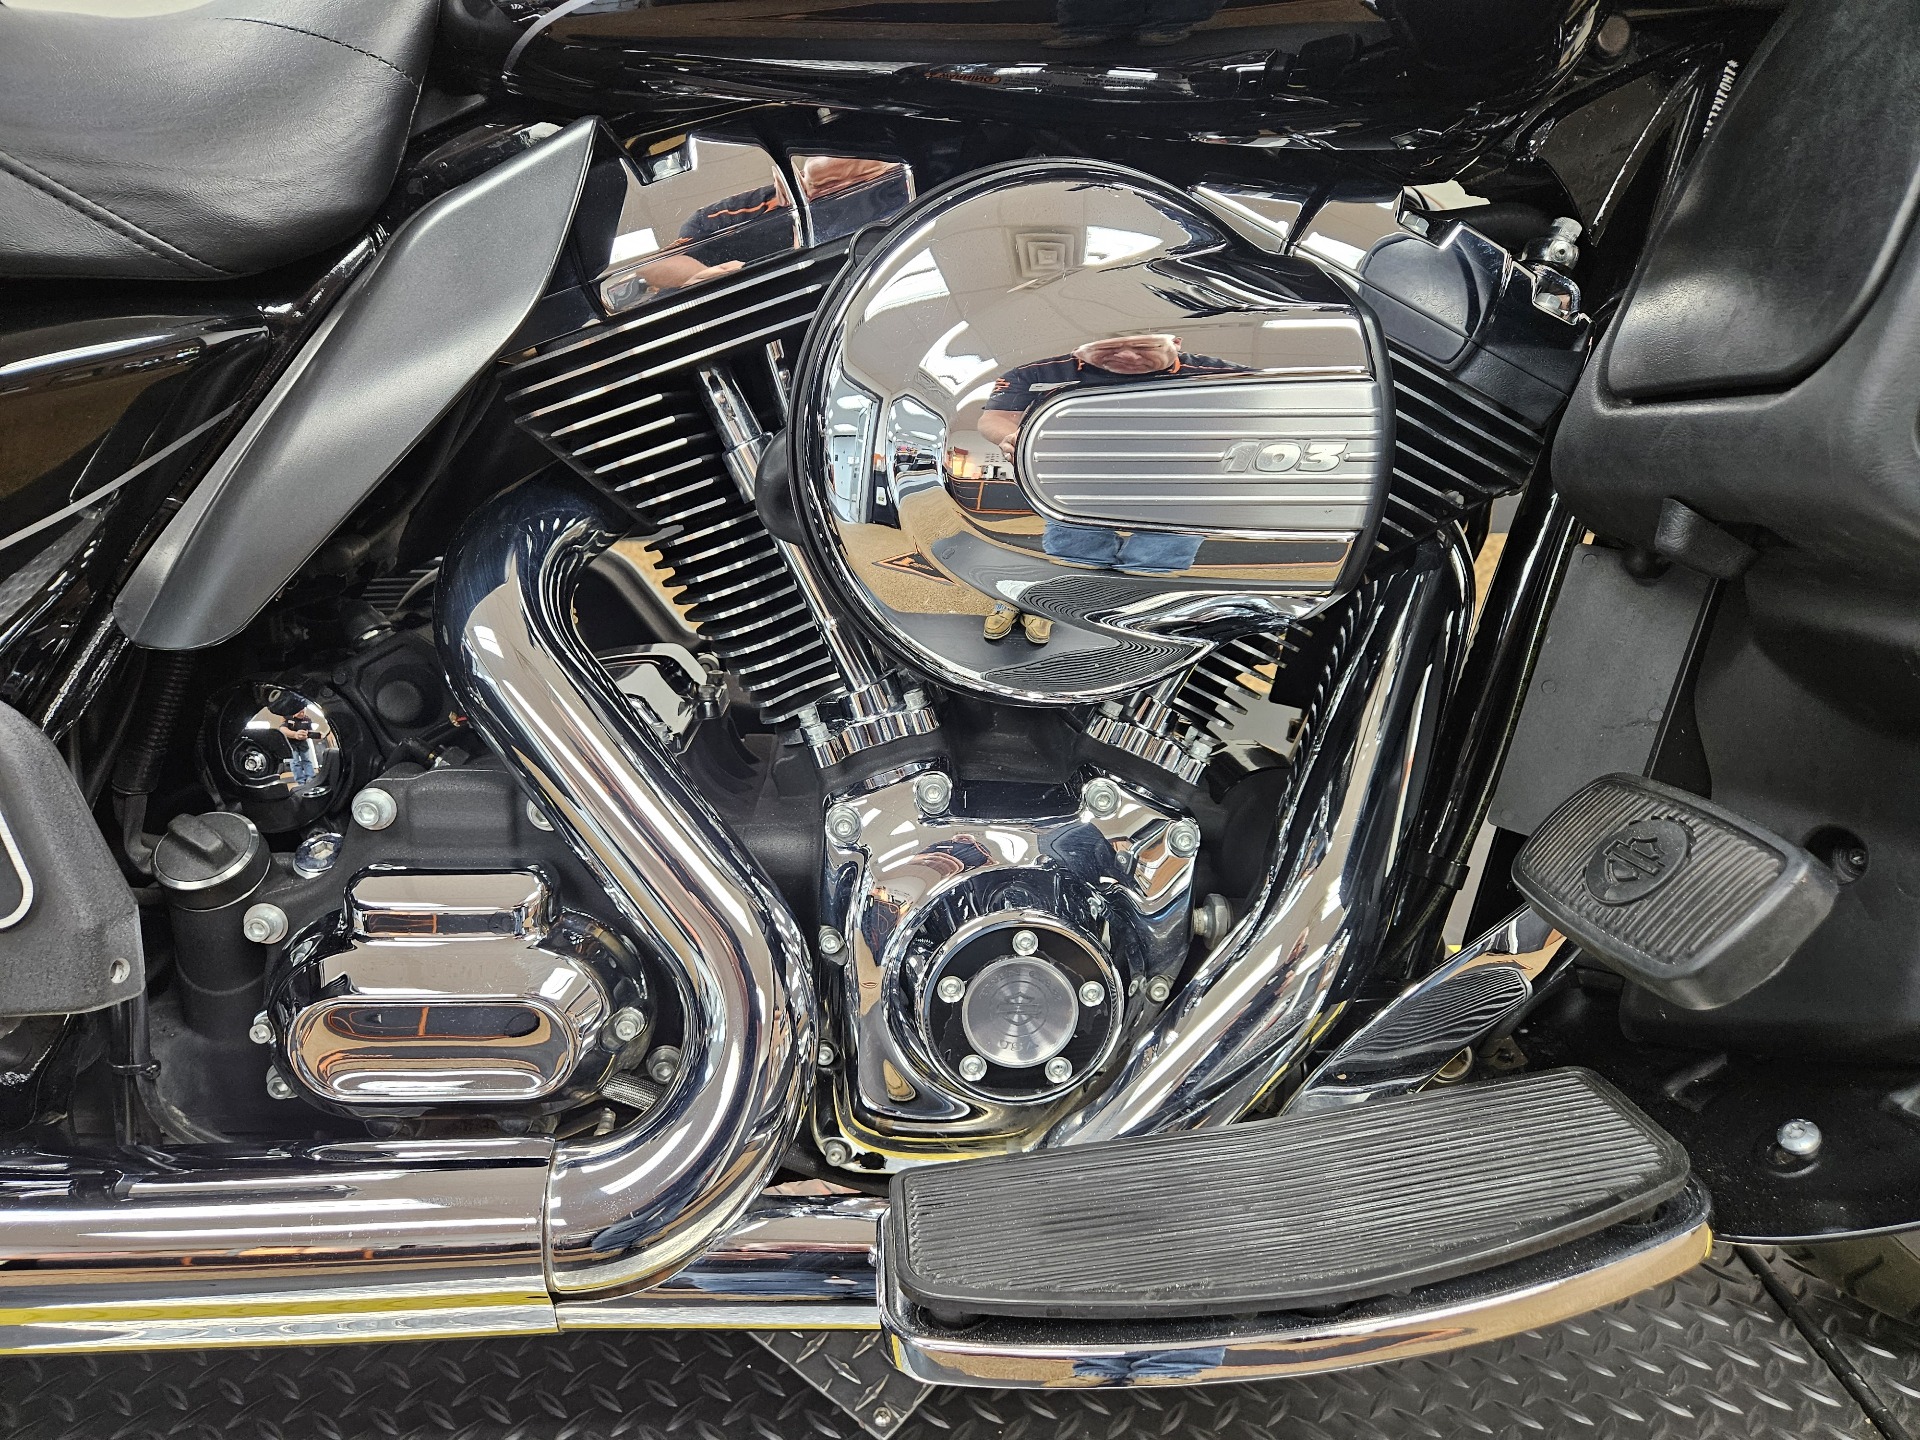 2015 Harley-Davidson Ultra Limited in Sauk Rapids, Minnesota - Photo 2